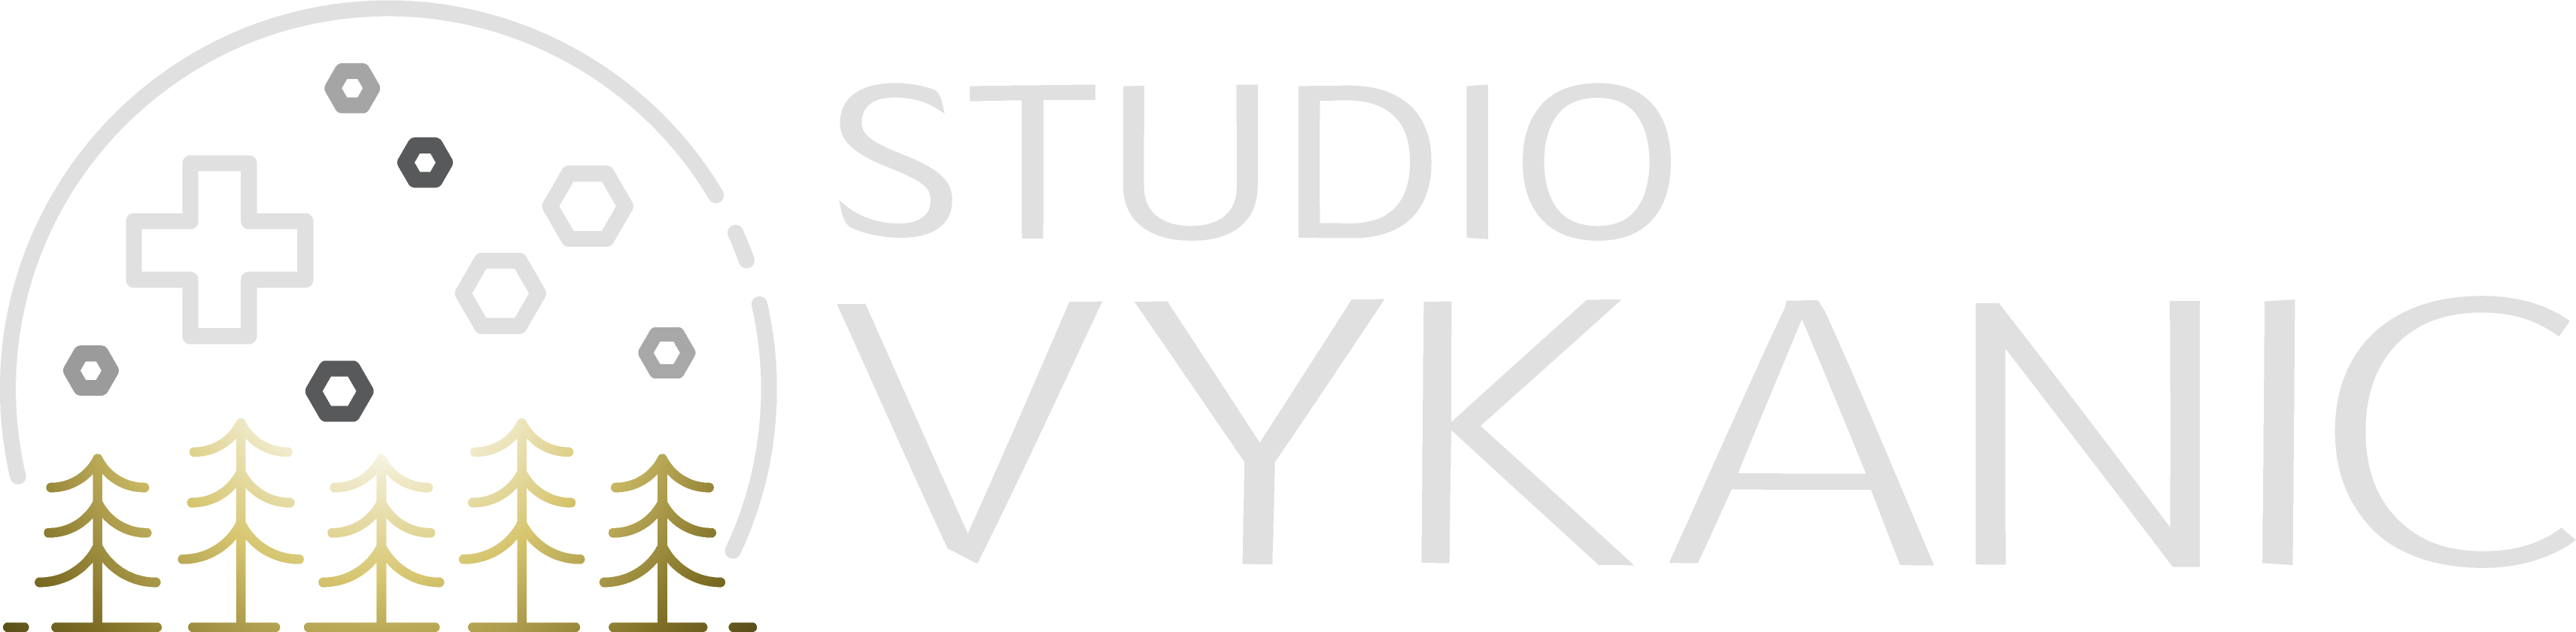 Studio Vykanic Name Logo